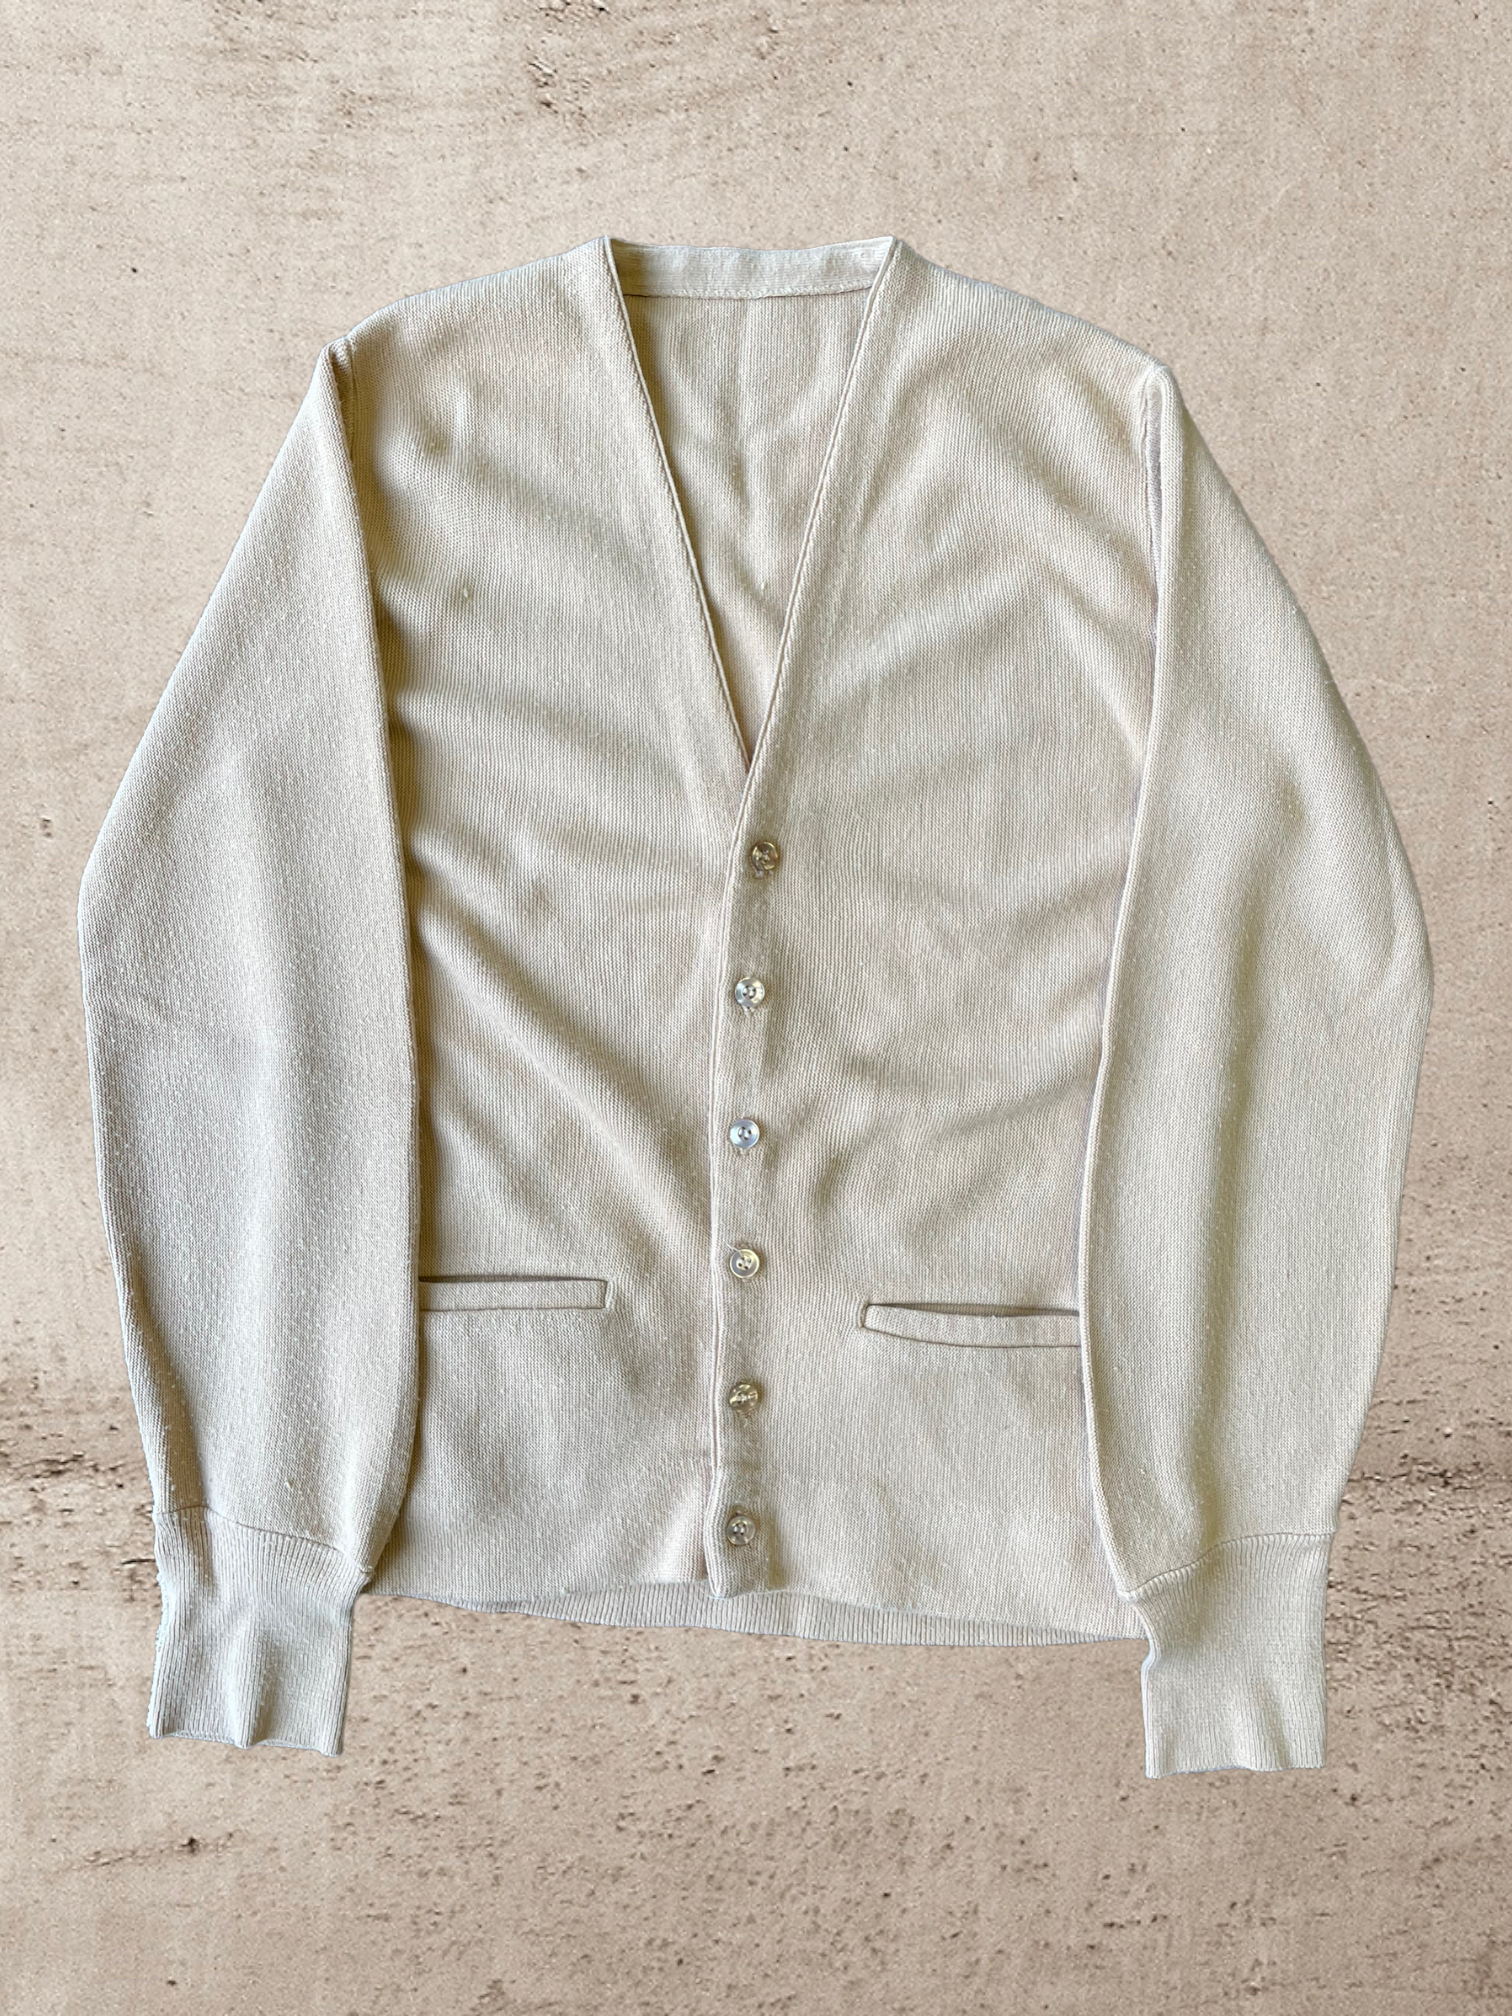 Vintage Cream Knit Cardigan - Medium